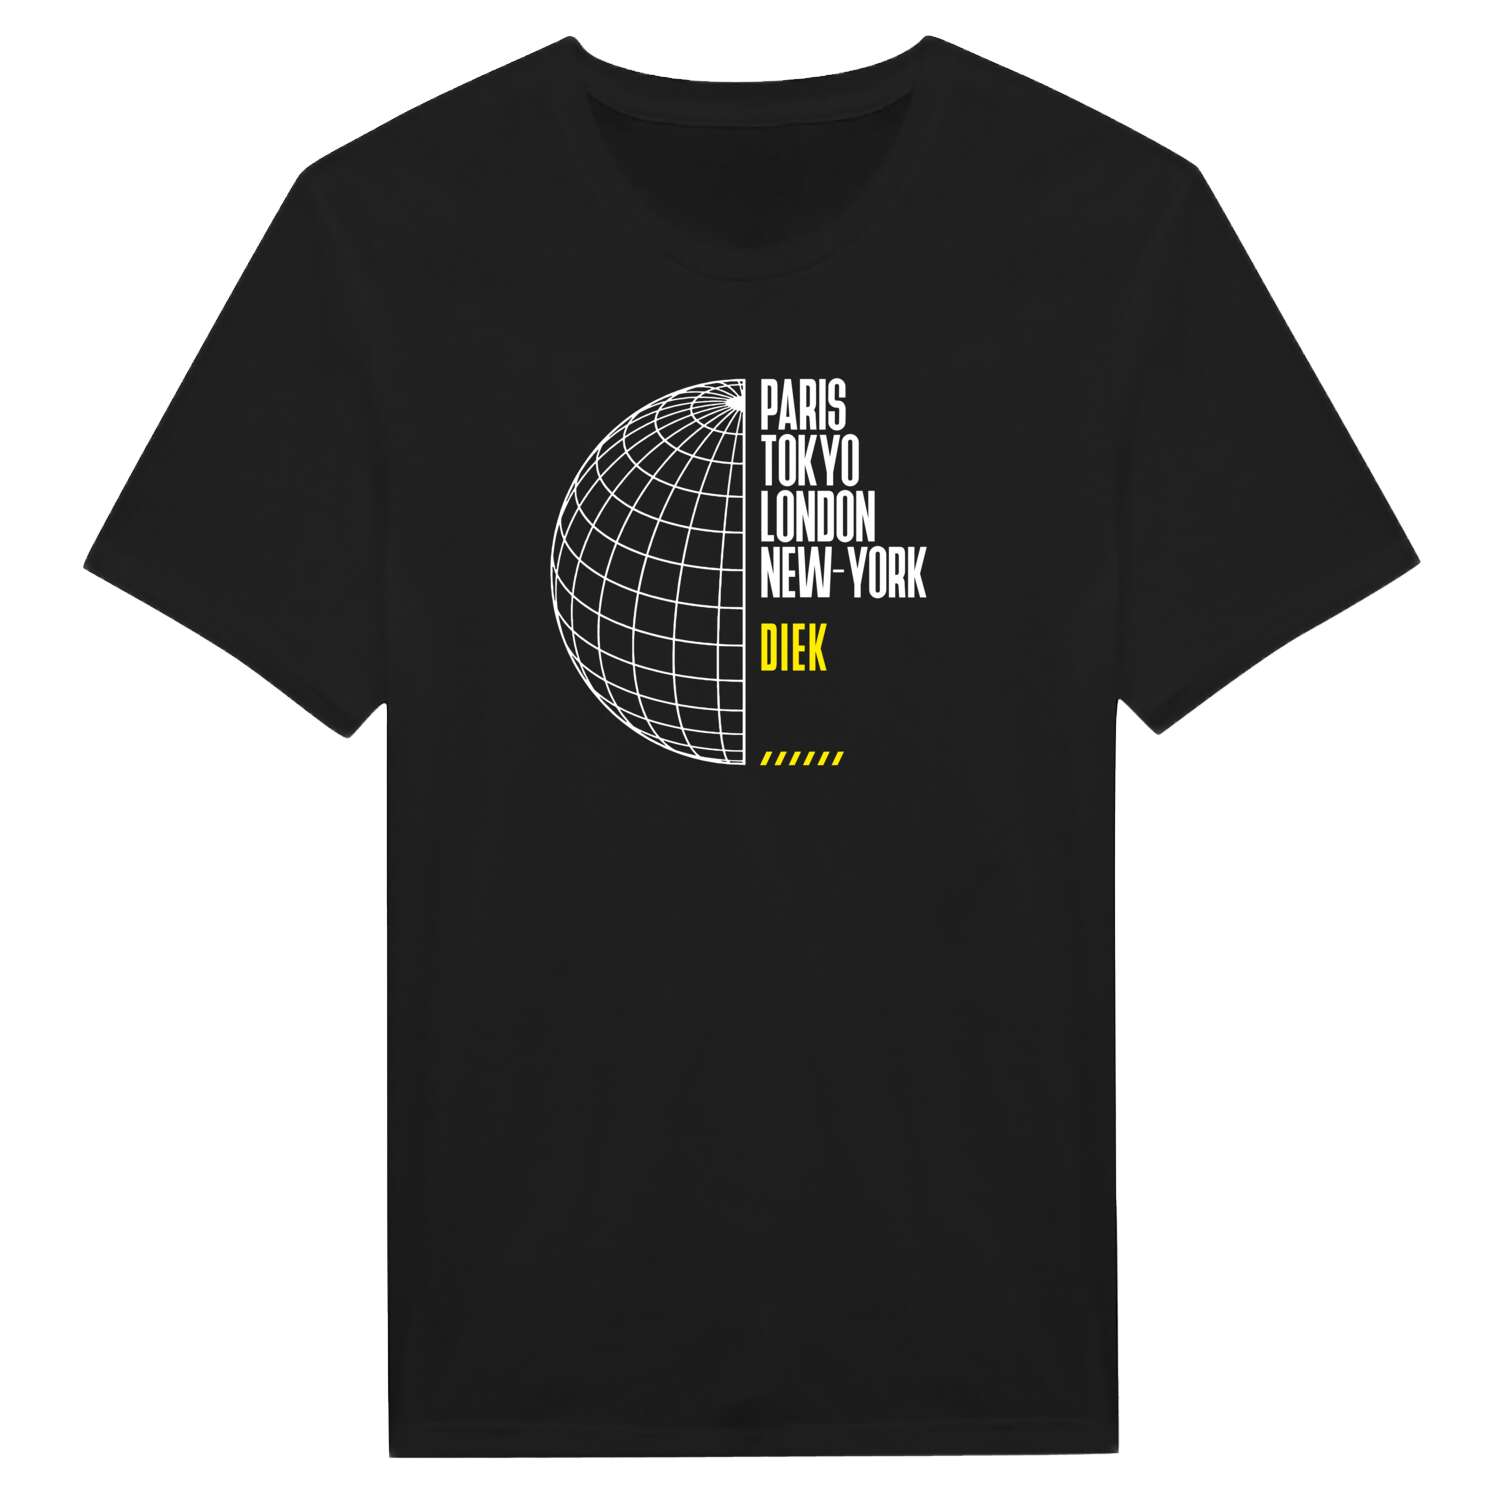 Diek T-Shirt »Paris Tokyo London«